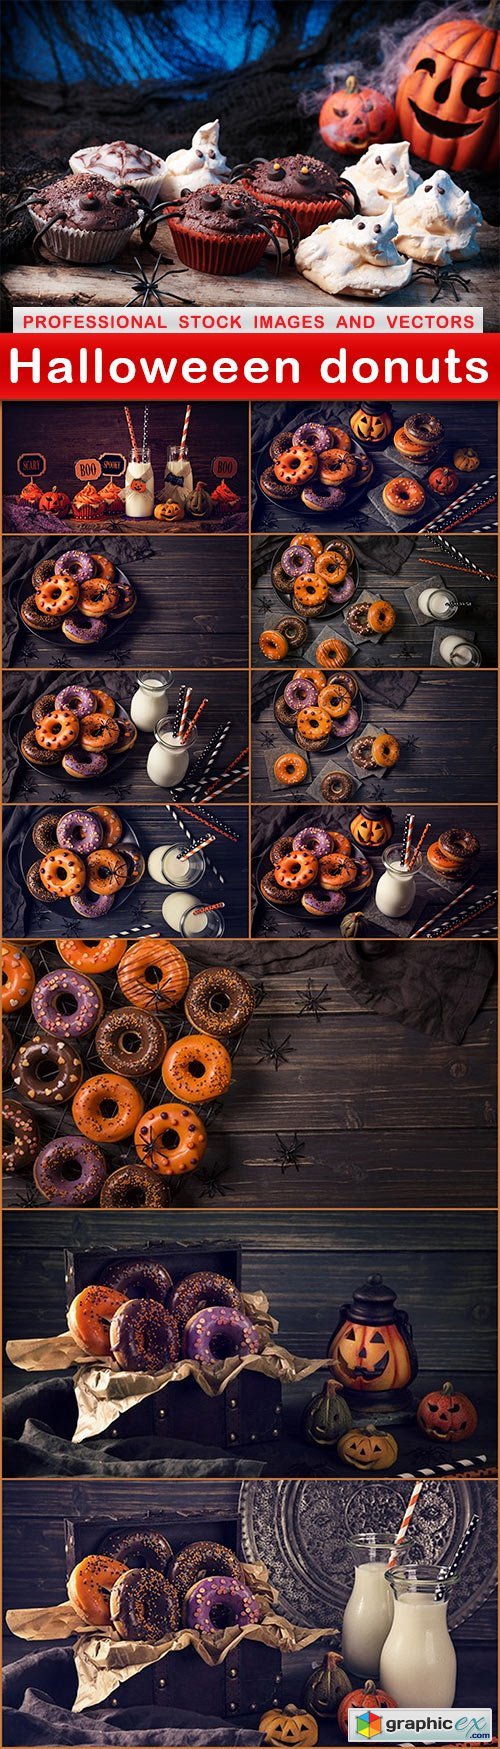 Halloweeen donuts - 12 UHQ JPEG